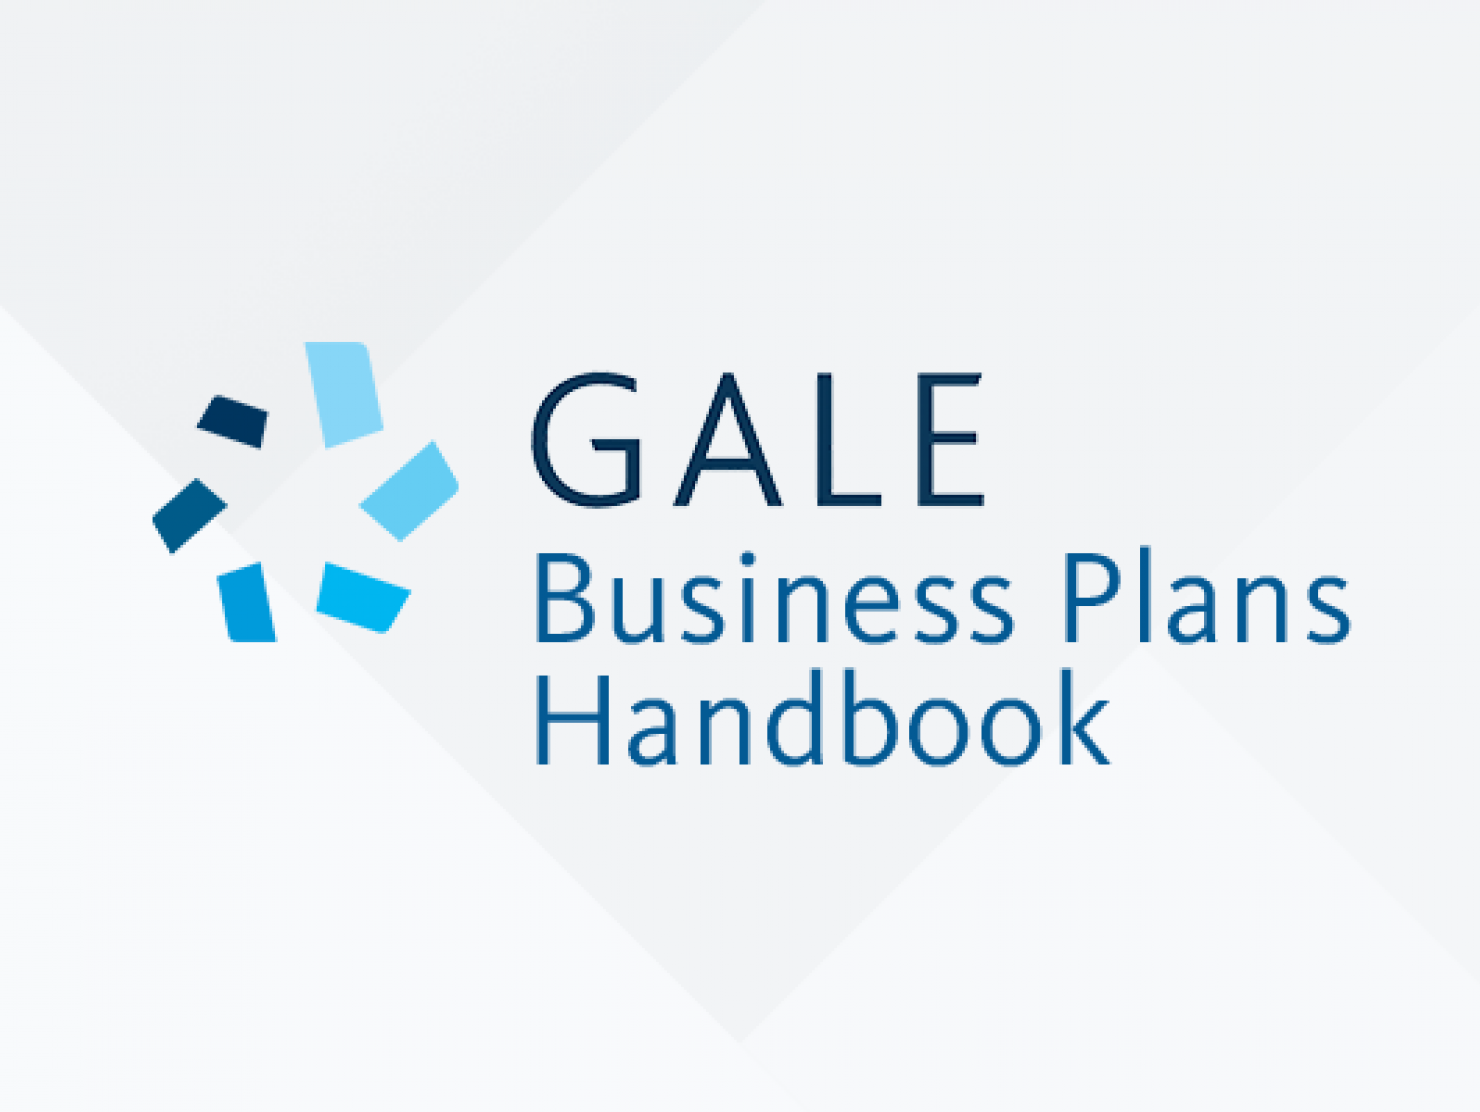 racp application and business plan handbook